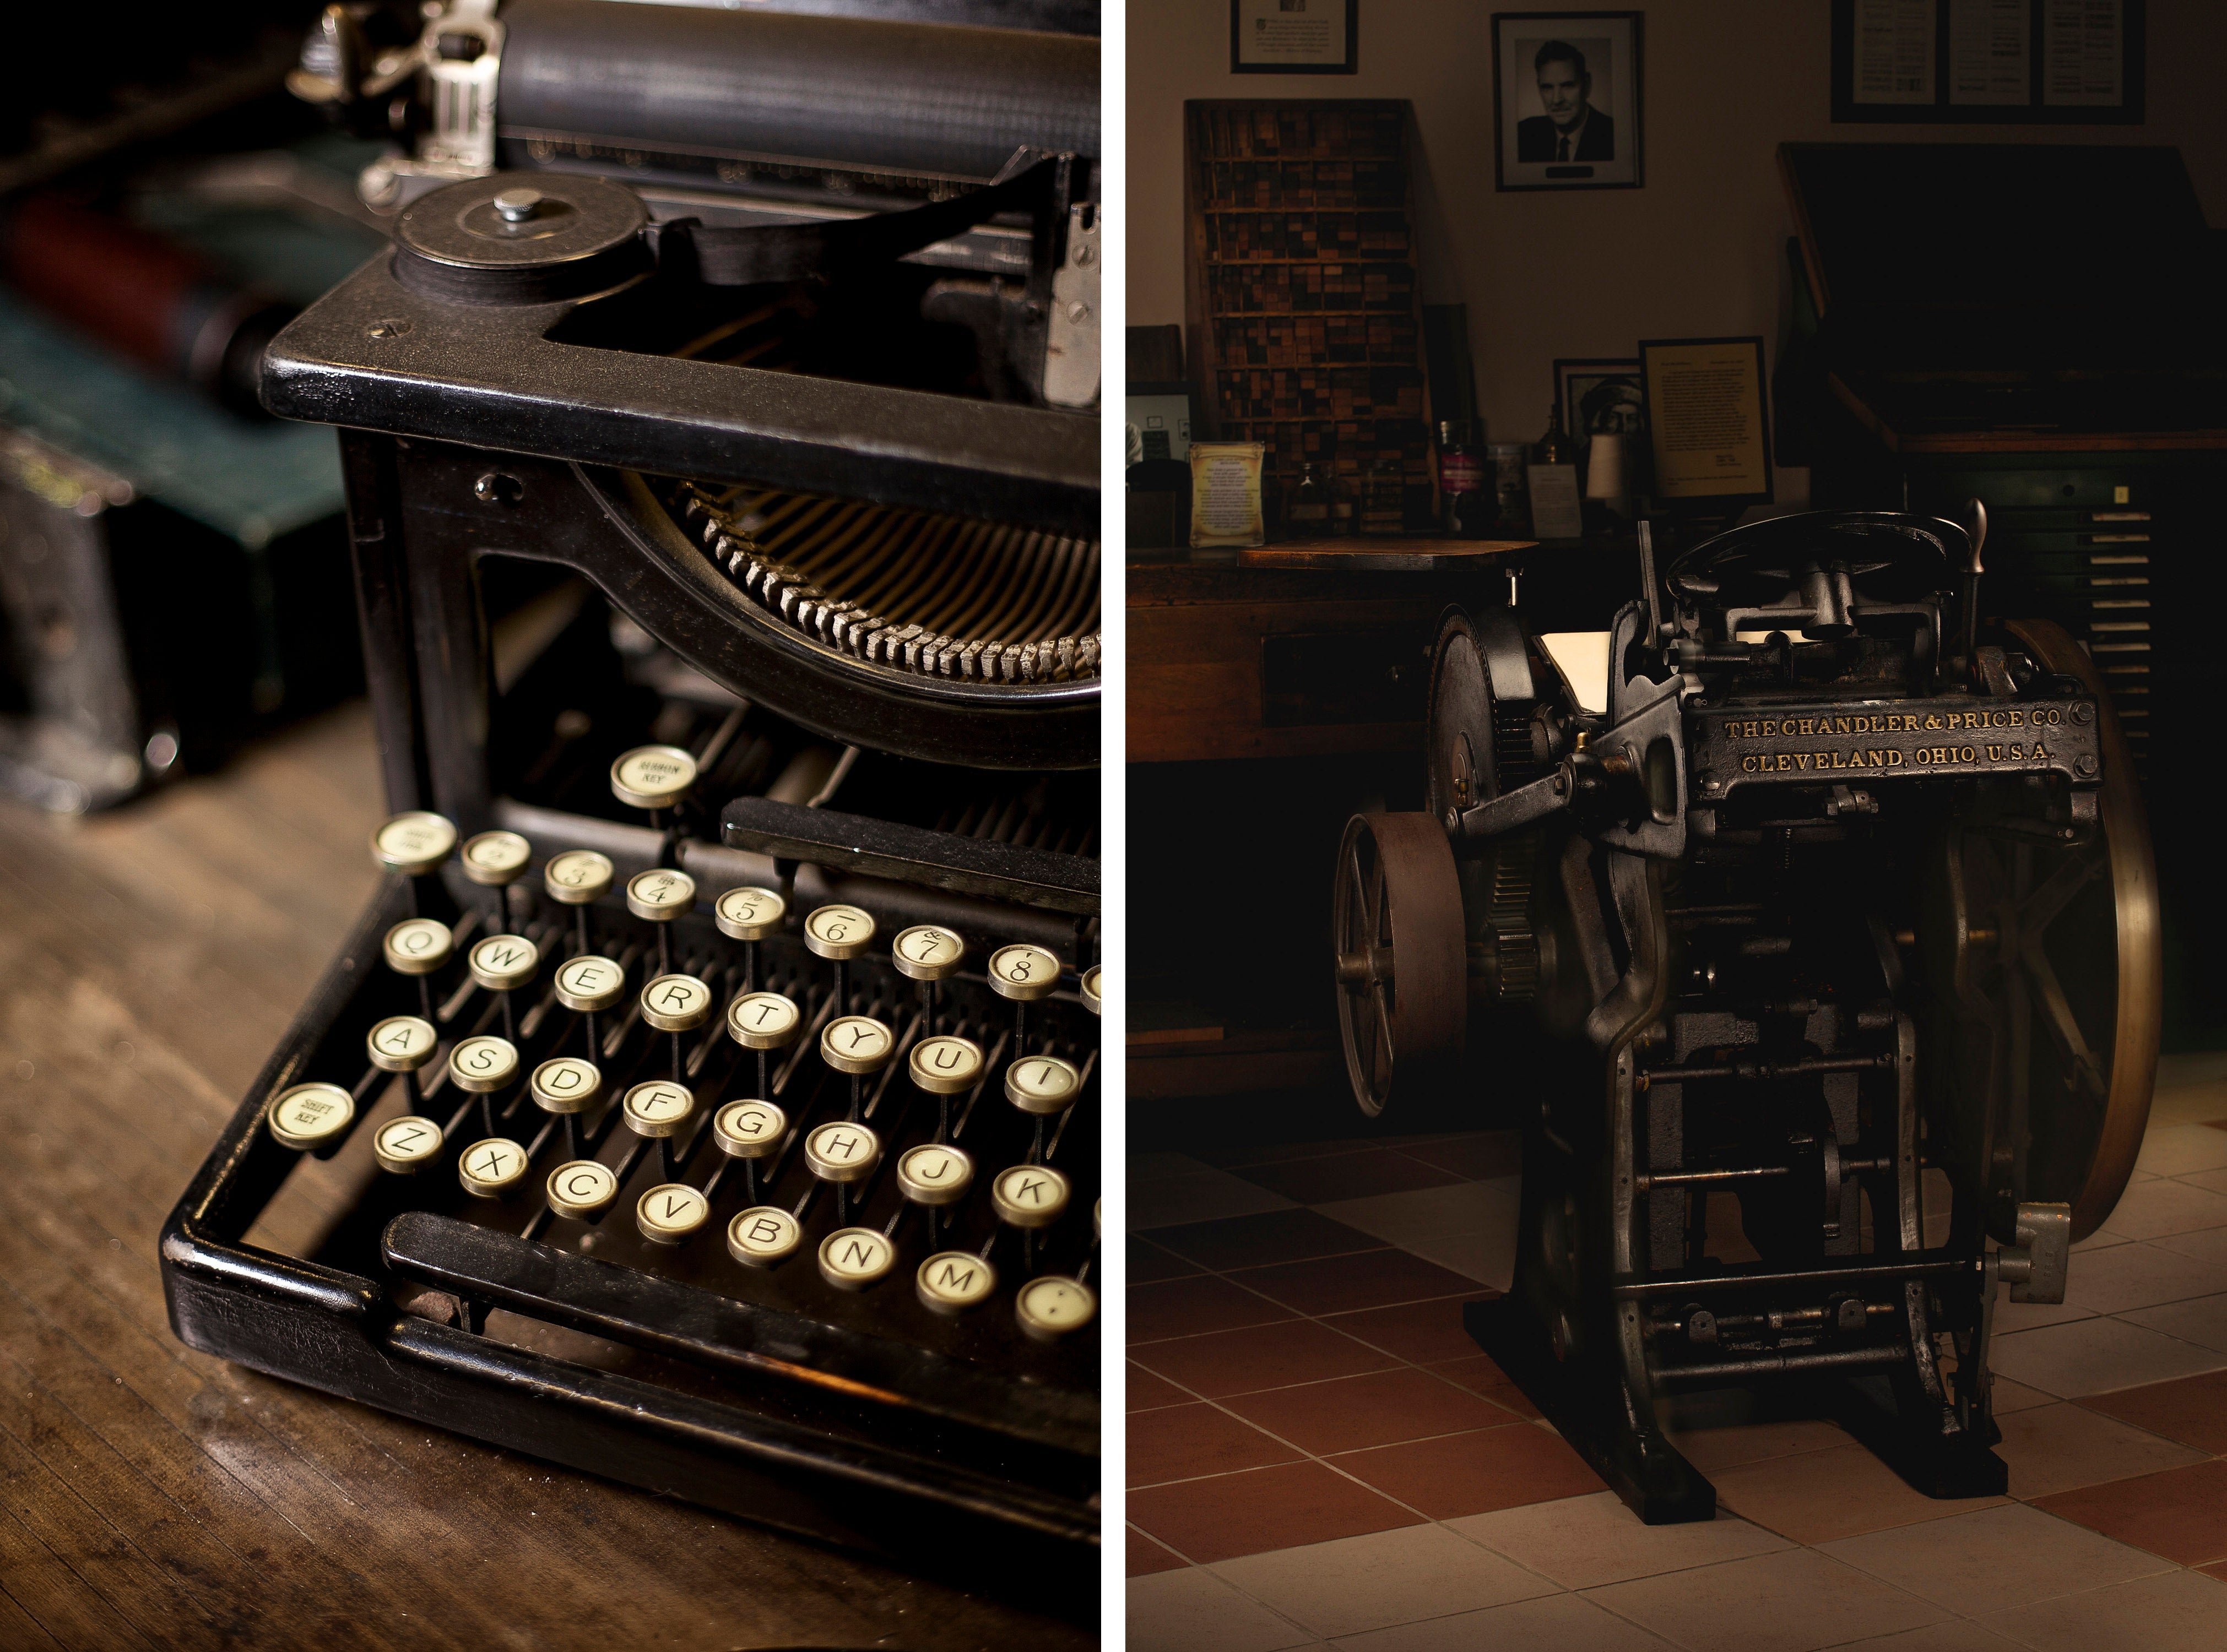 Antique typewriter and letterpress